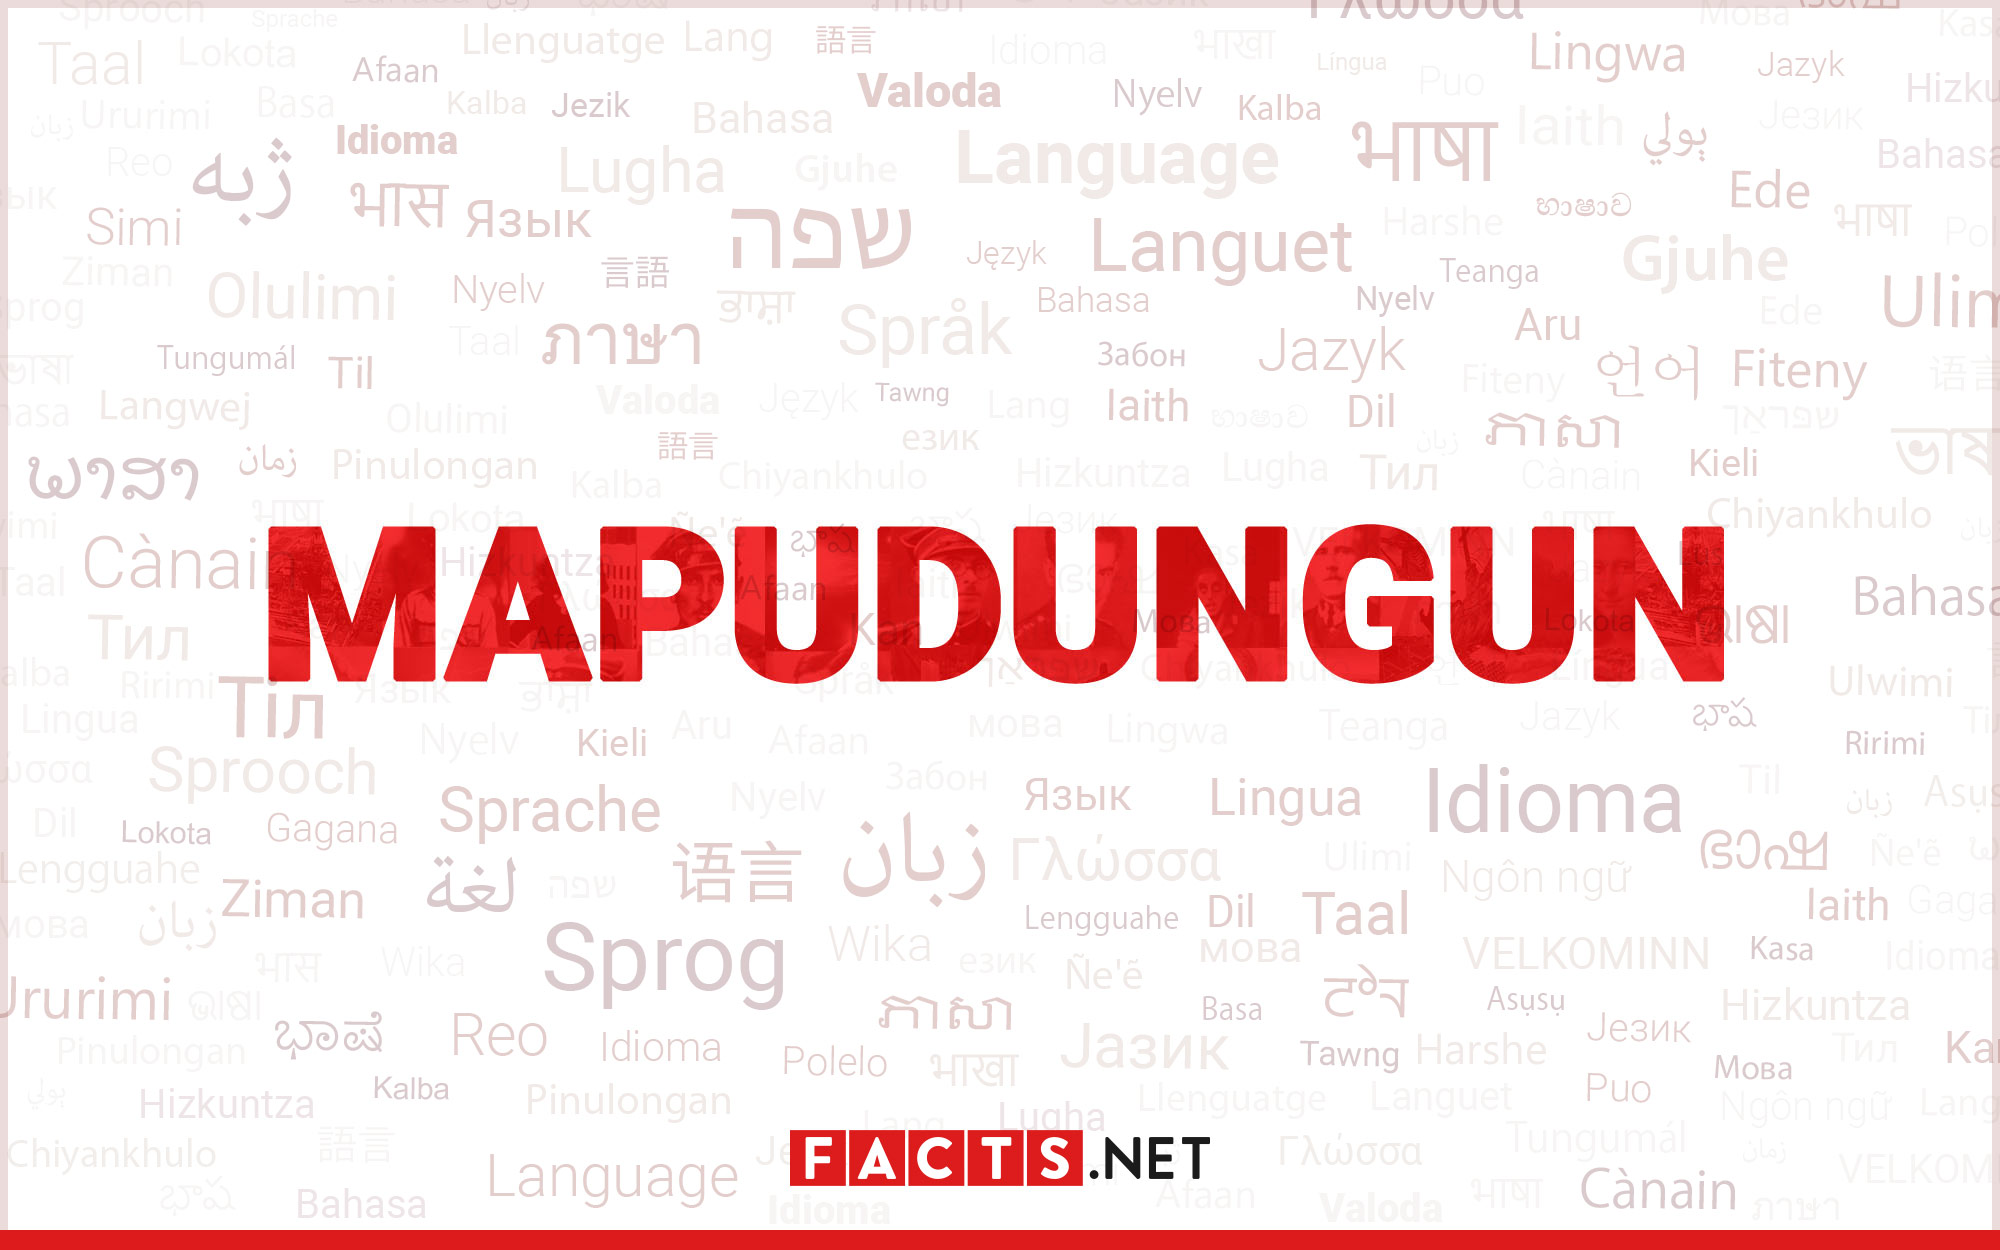 15-captivating-facts-about-mapudungun